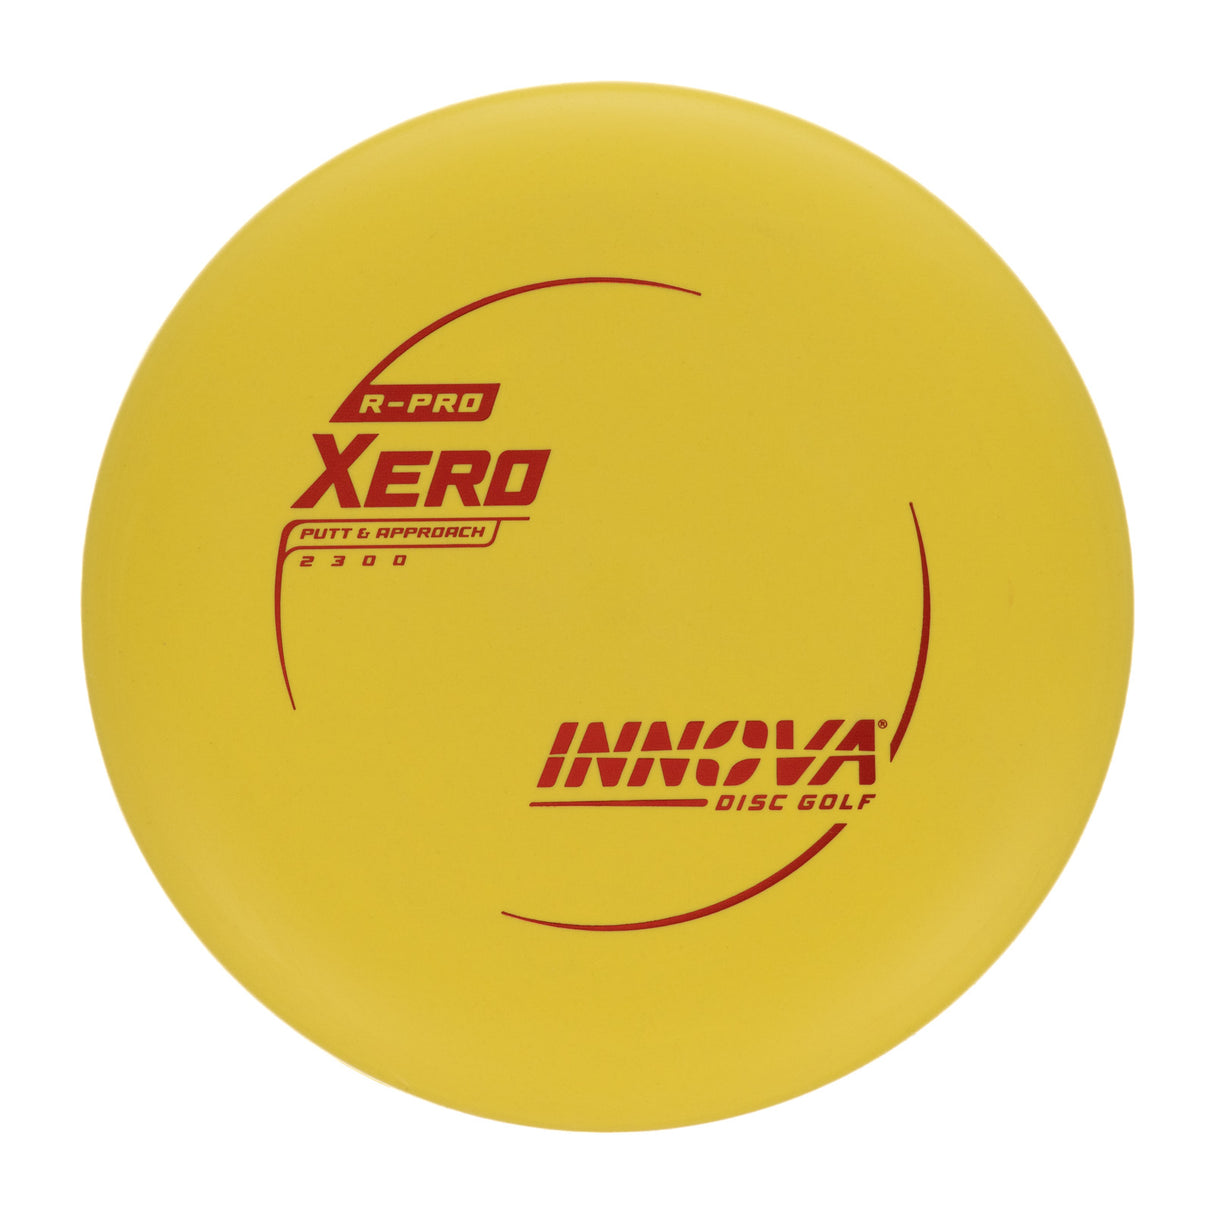 Innova Xero - R-Pro 173g | Style 0002